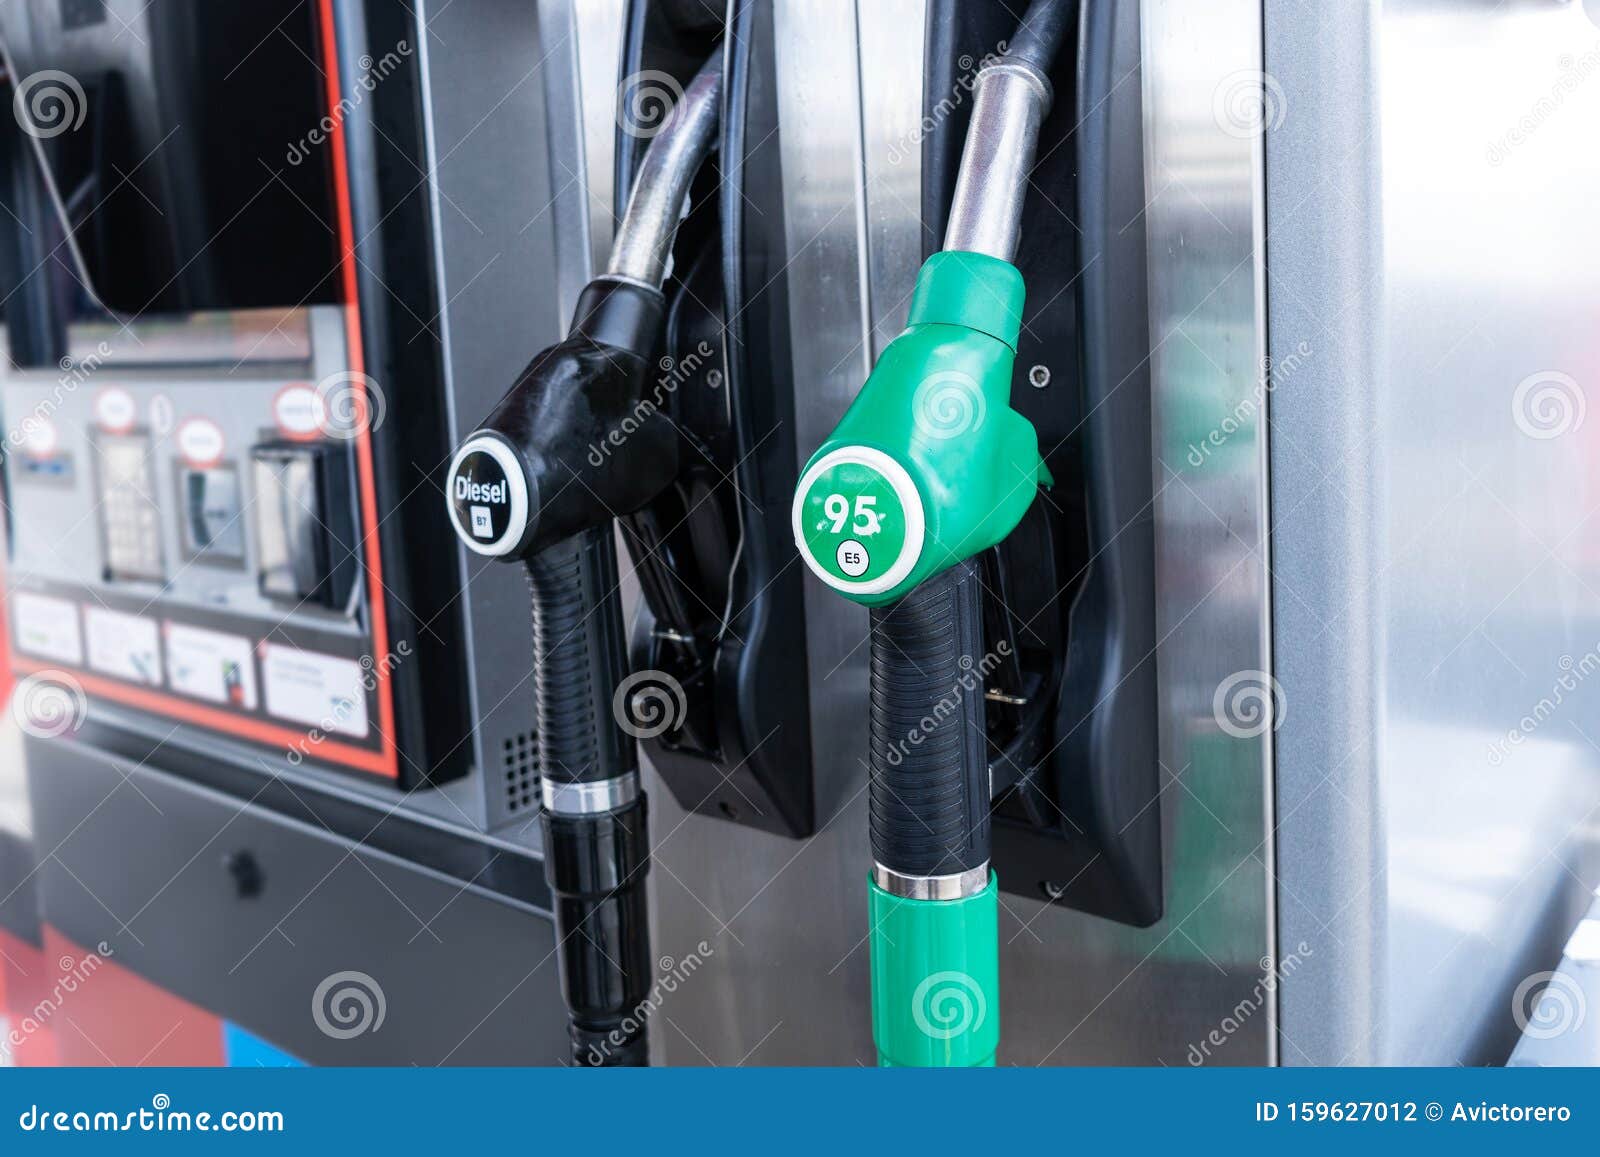 fuel pumps. diesel and gasoline